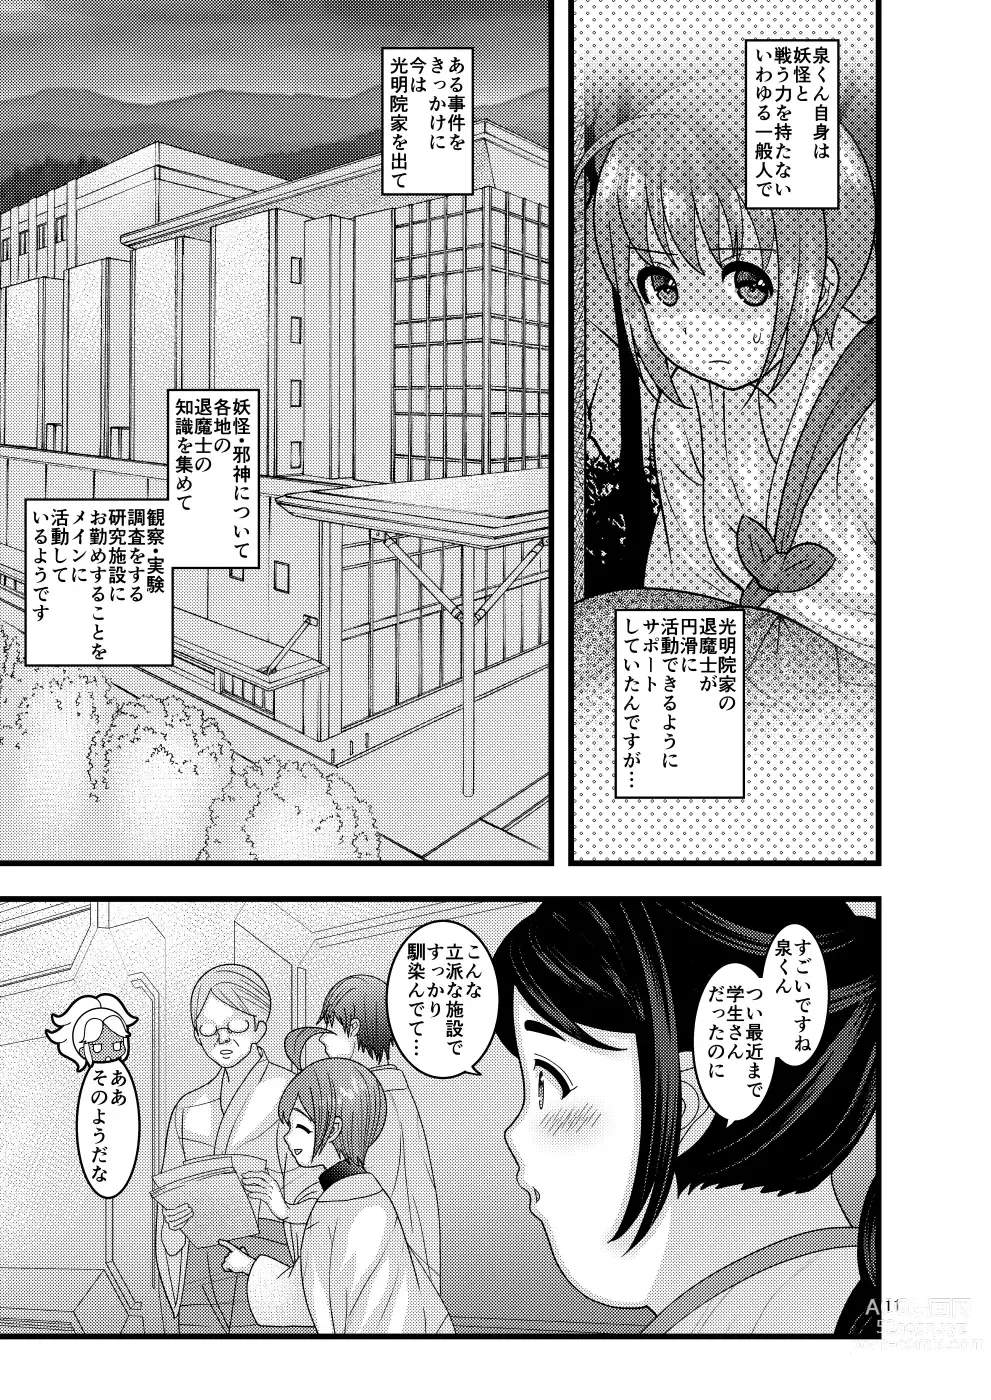 Page 11 of doujinshi Ochiru Hana Botan to Kikyou Hen Ni